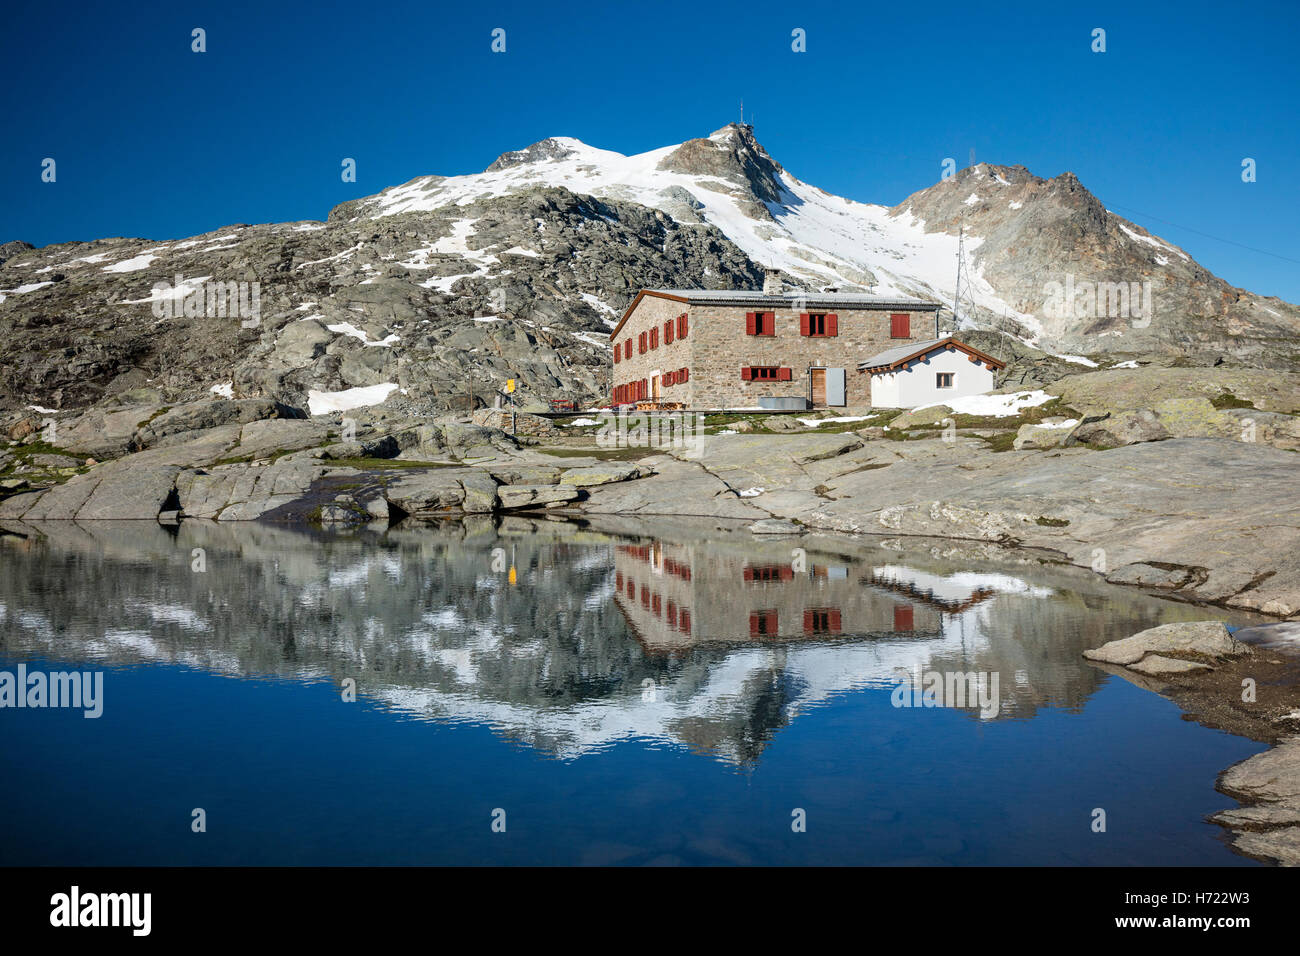 Reflet de la Fuorcla Surlej Silvaplana, refuge, au dessus de St Moritz. Alpes Berniner, Grisons, Suisse. Banque D'Images